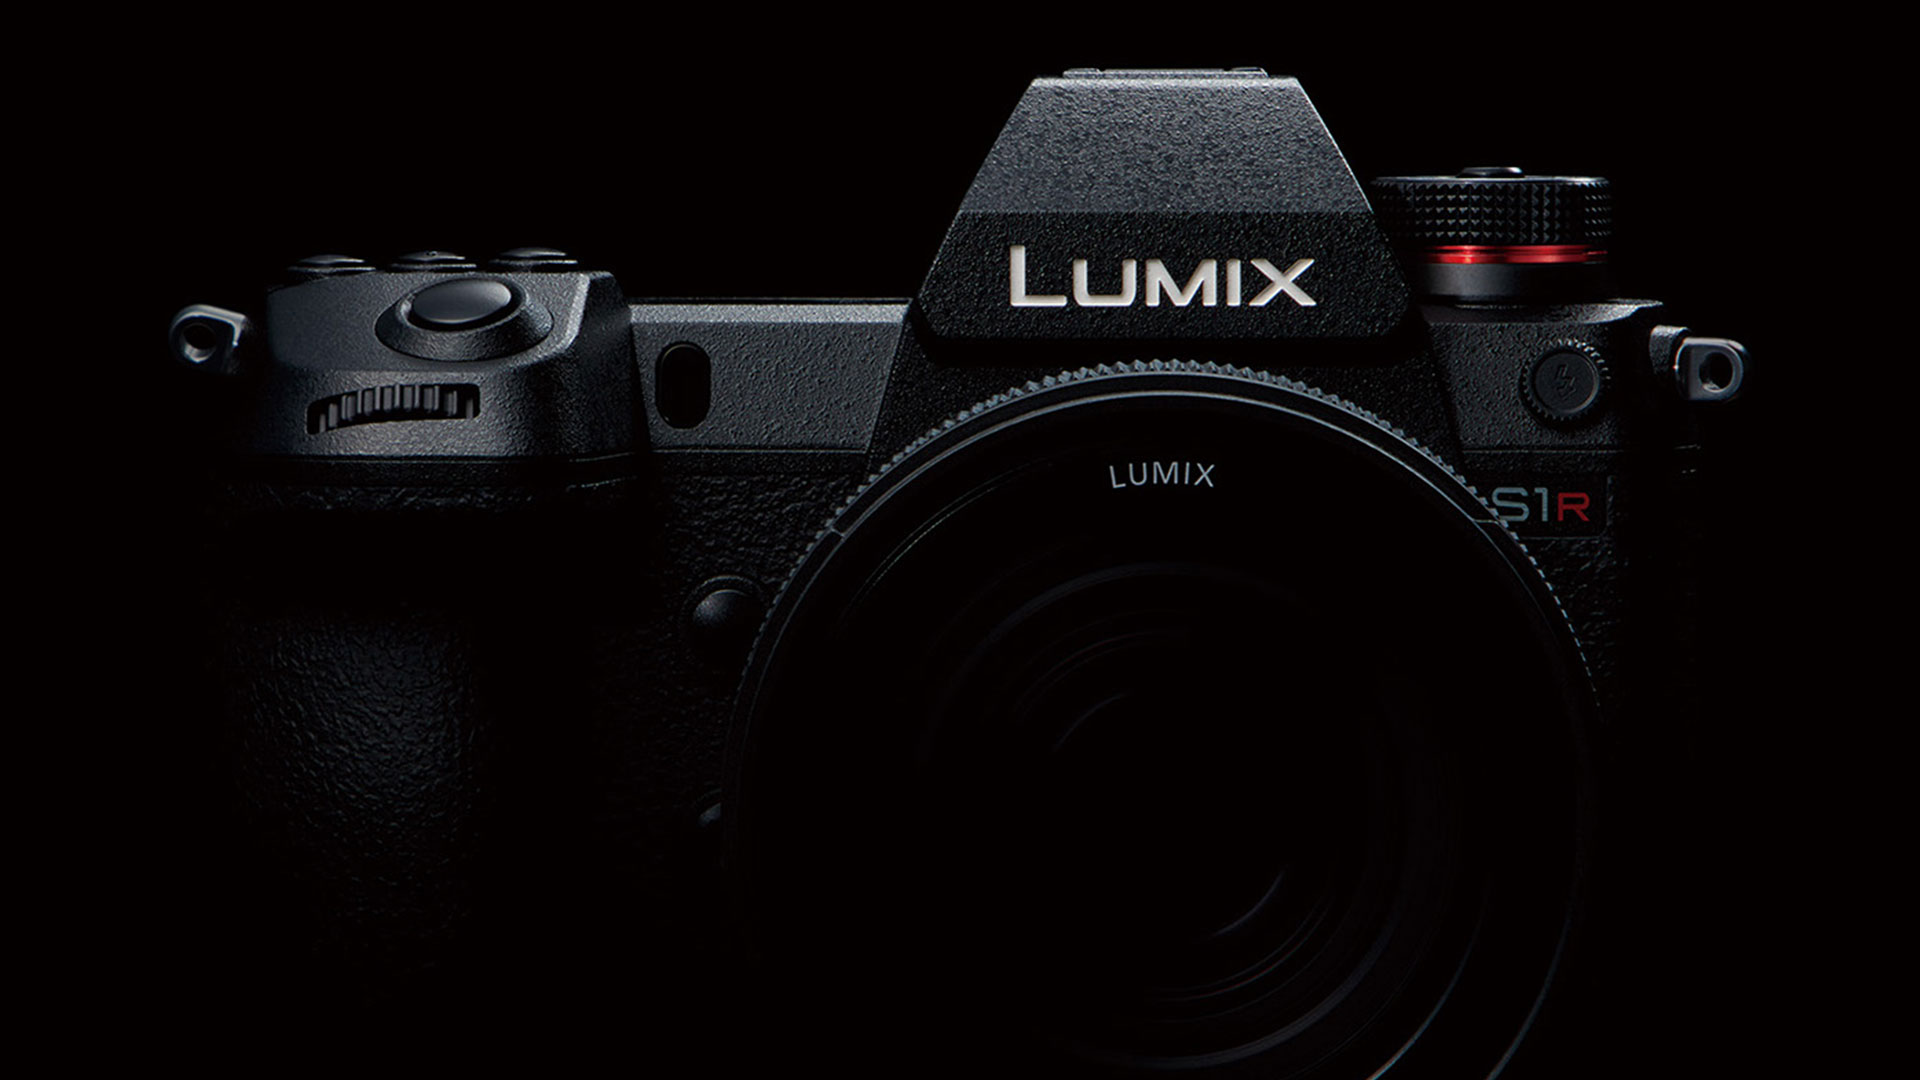 LUMIX releases specs of full-frame S series cameras - Photofocus